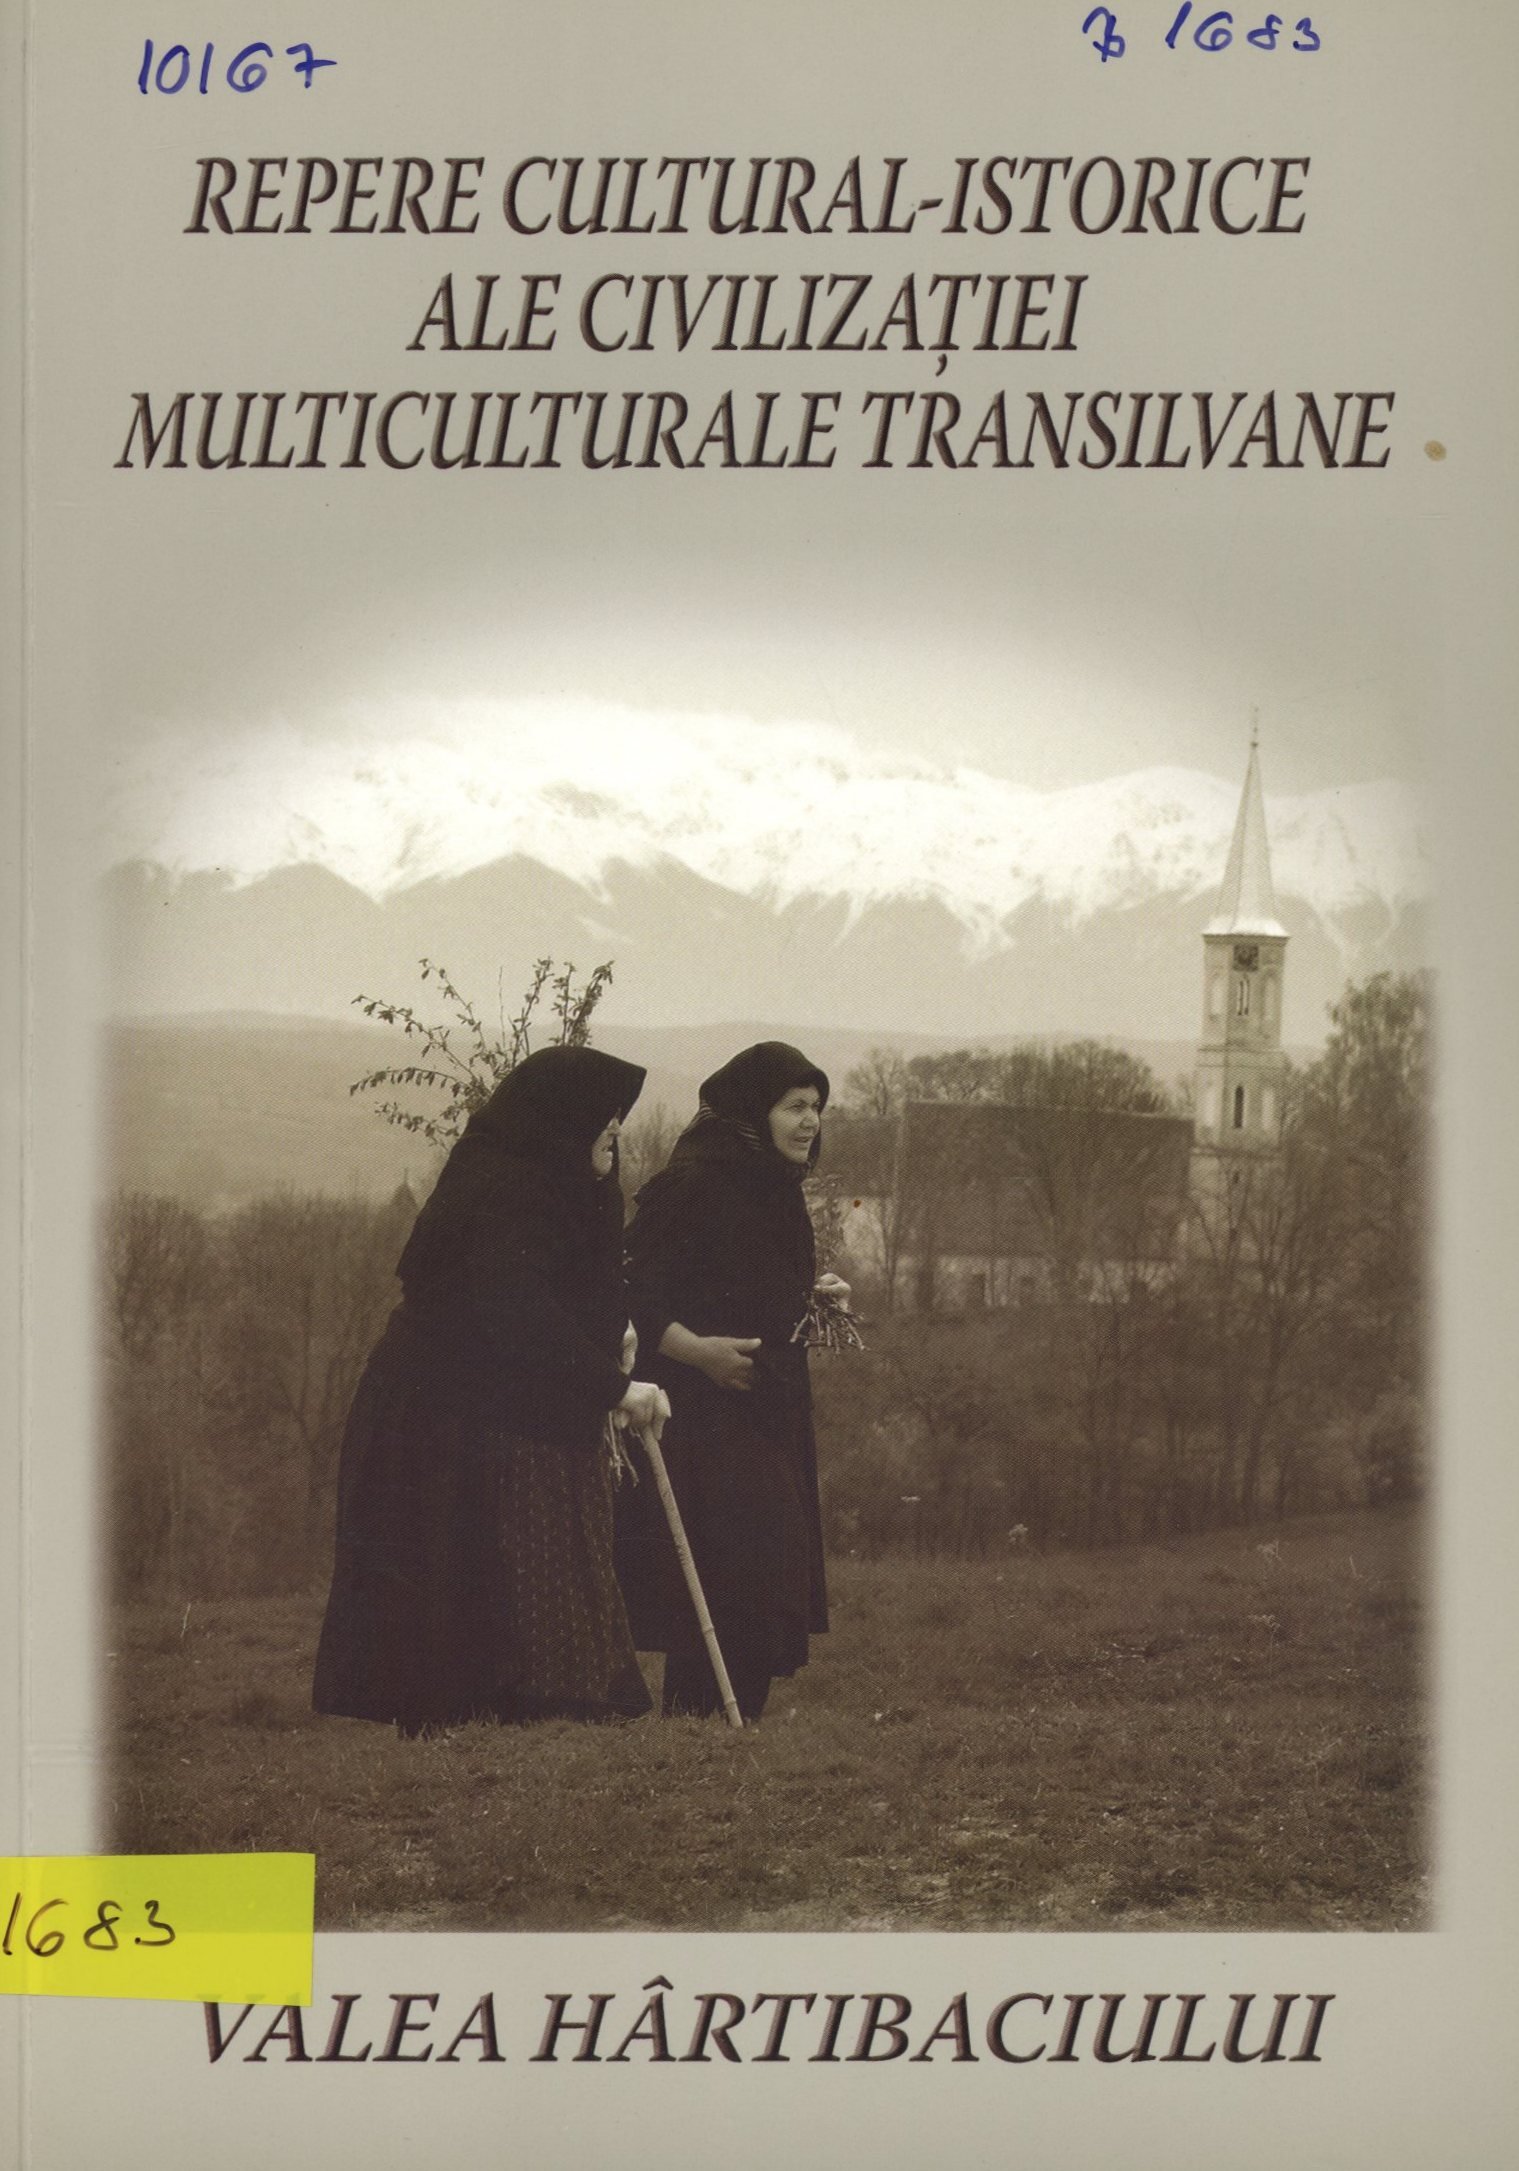 Repere Cultural-Istorice ale Civilizației Multiculturale Transilvane (Erkel Ferenc Múzeum és Könyvtár, Gyula CC BY-NC-SA)